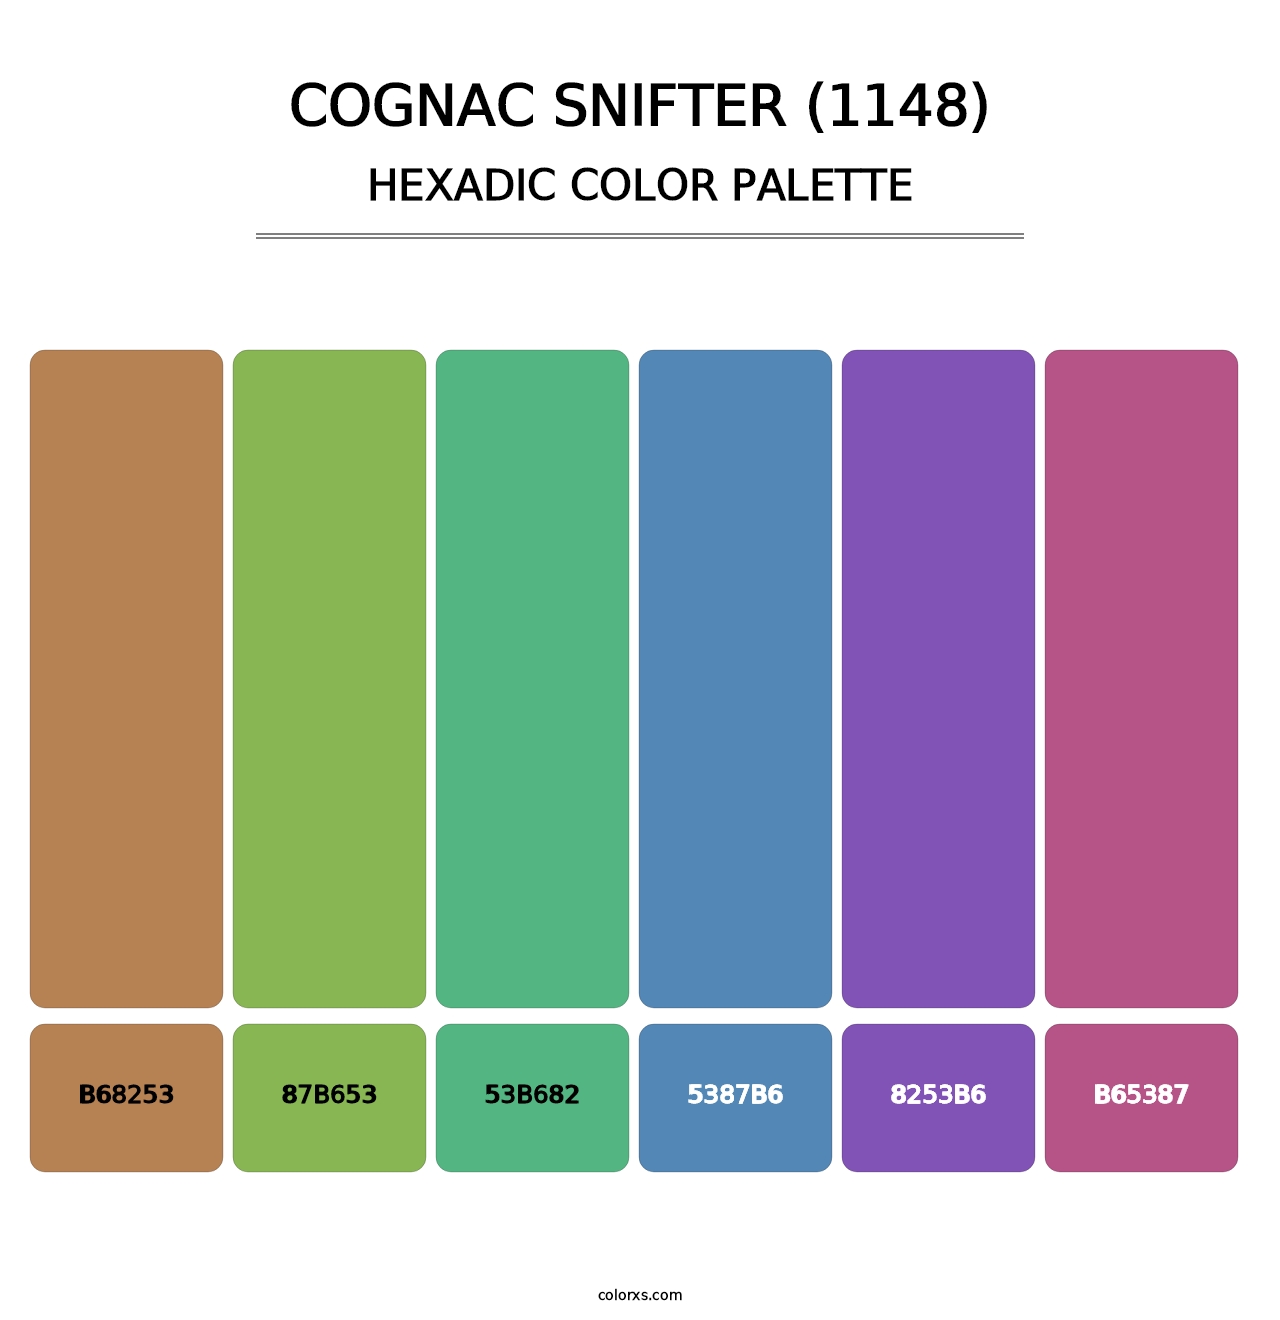 Cognac Snifter (1148) - Hexadic Color Palette